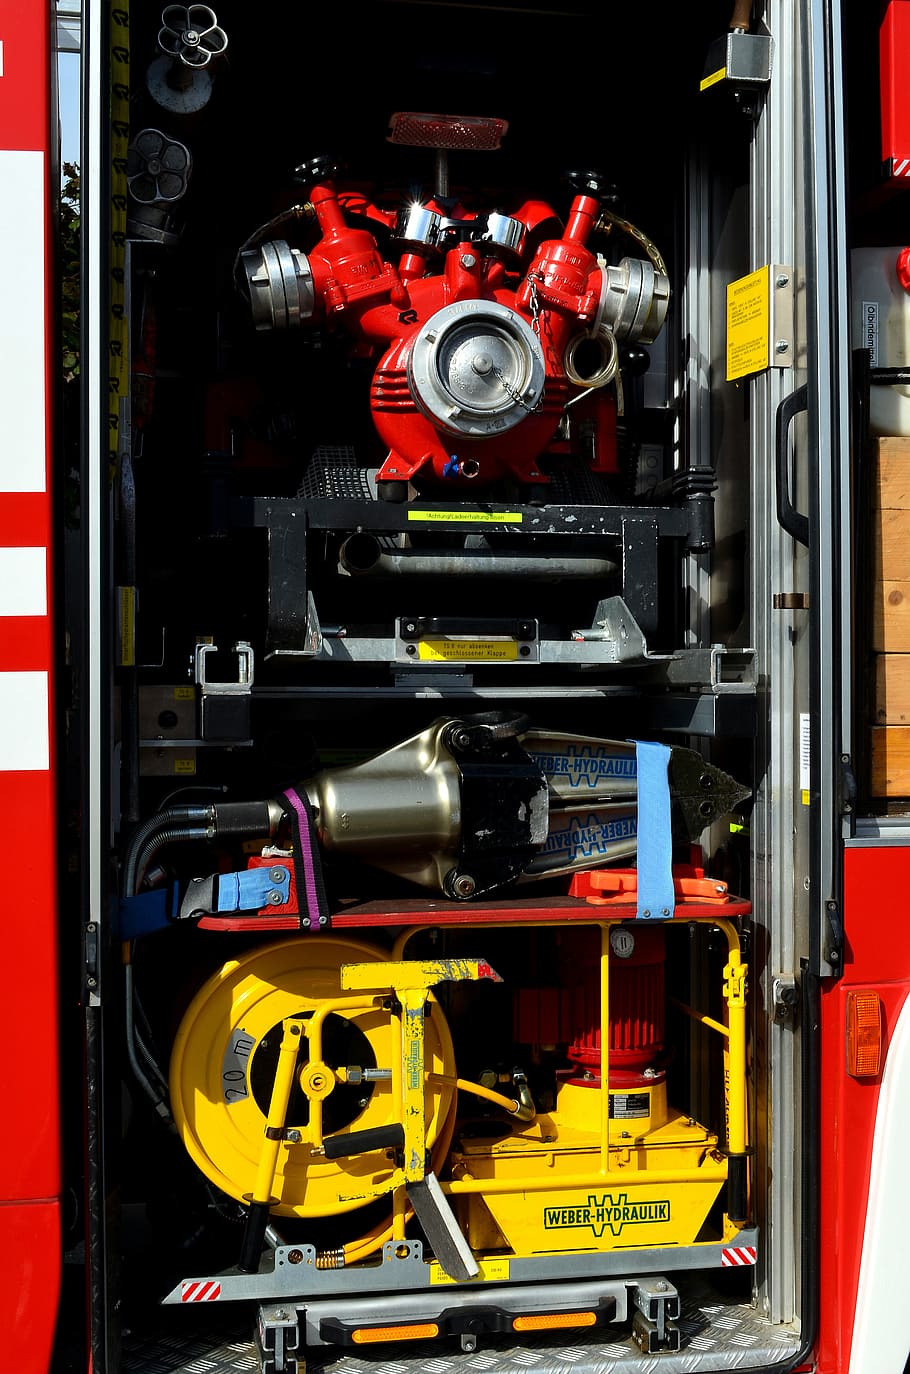 fogo, equipamento de bombeiro, equipamento caminhão de bombeiros, caminhão de bombeiros, equipamento, conexões de bombeiros, espalhador hidráulico de brigada de incêndio, veículos, ferramentas, bomba hidráulica